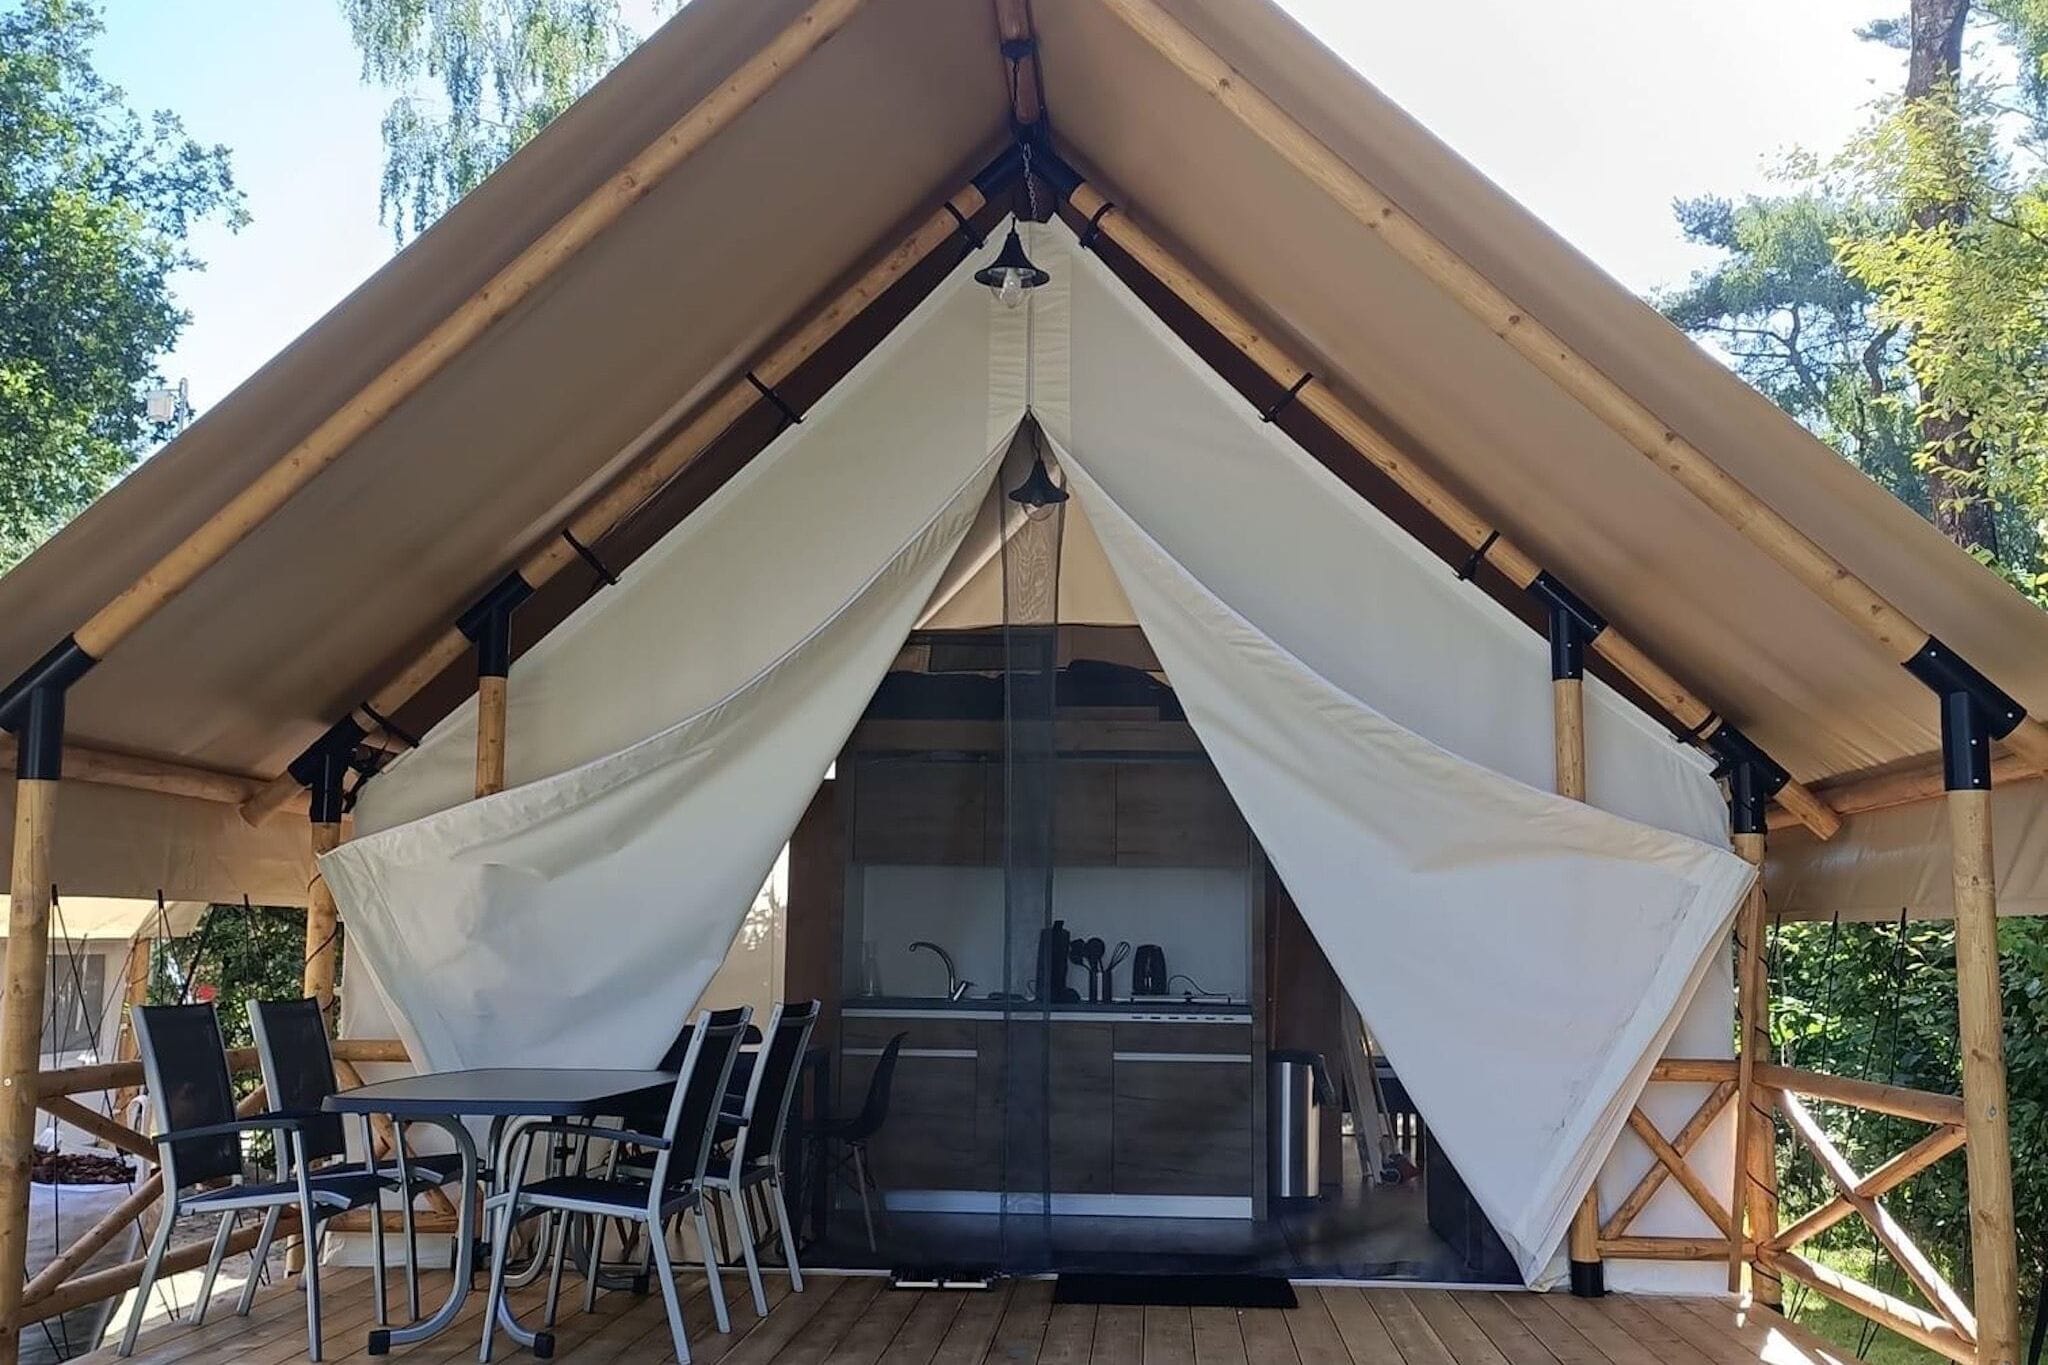 Nice tent lodge with veranda, 2 km. from Ijhorst